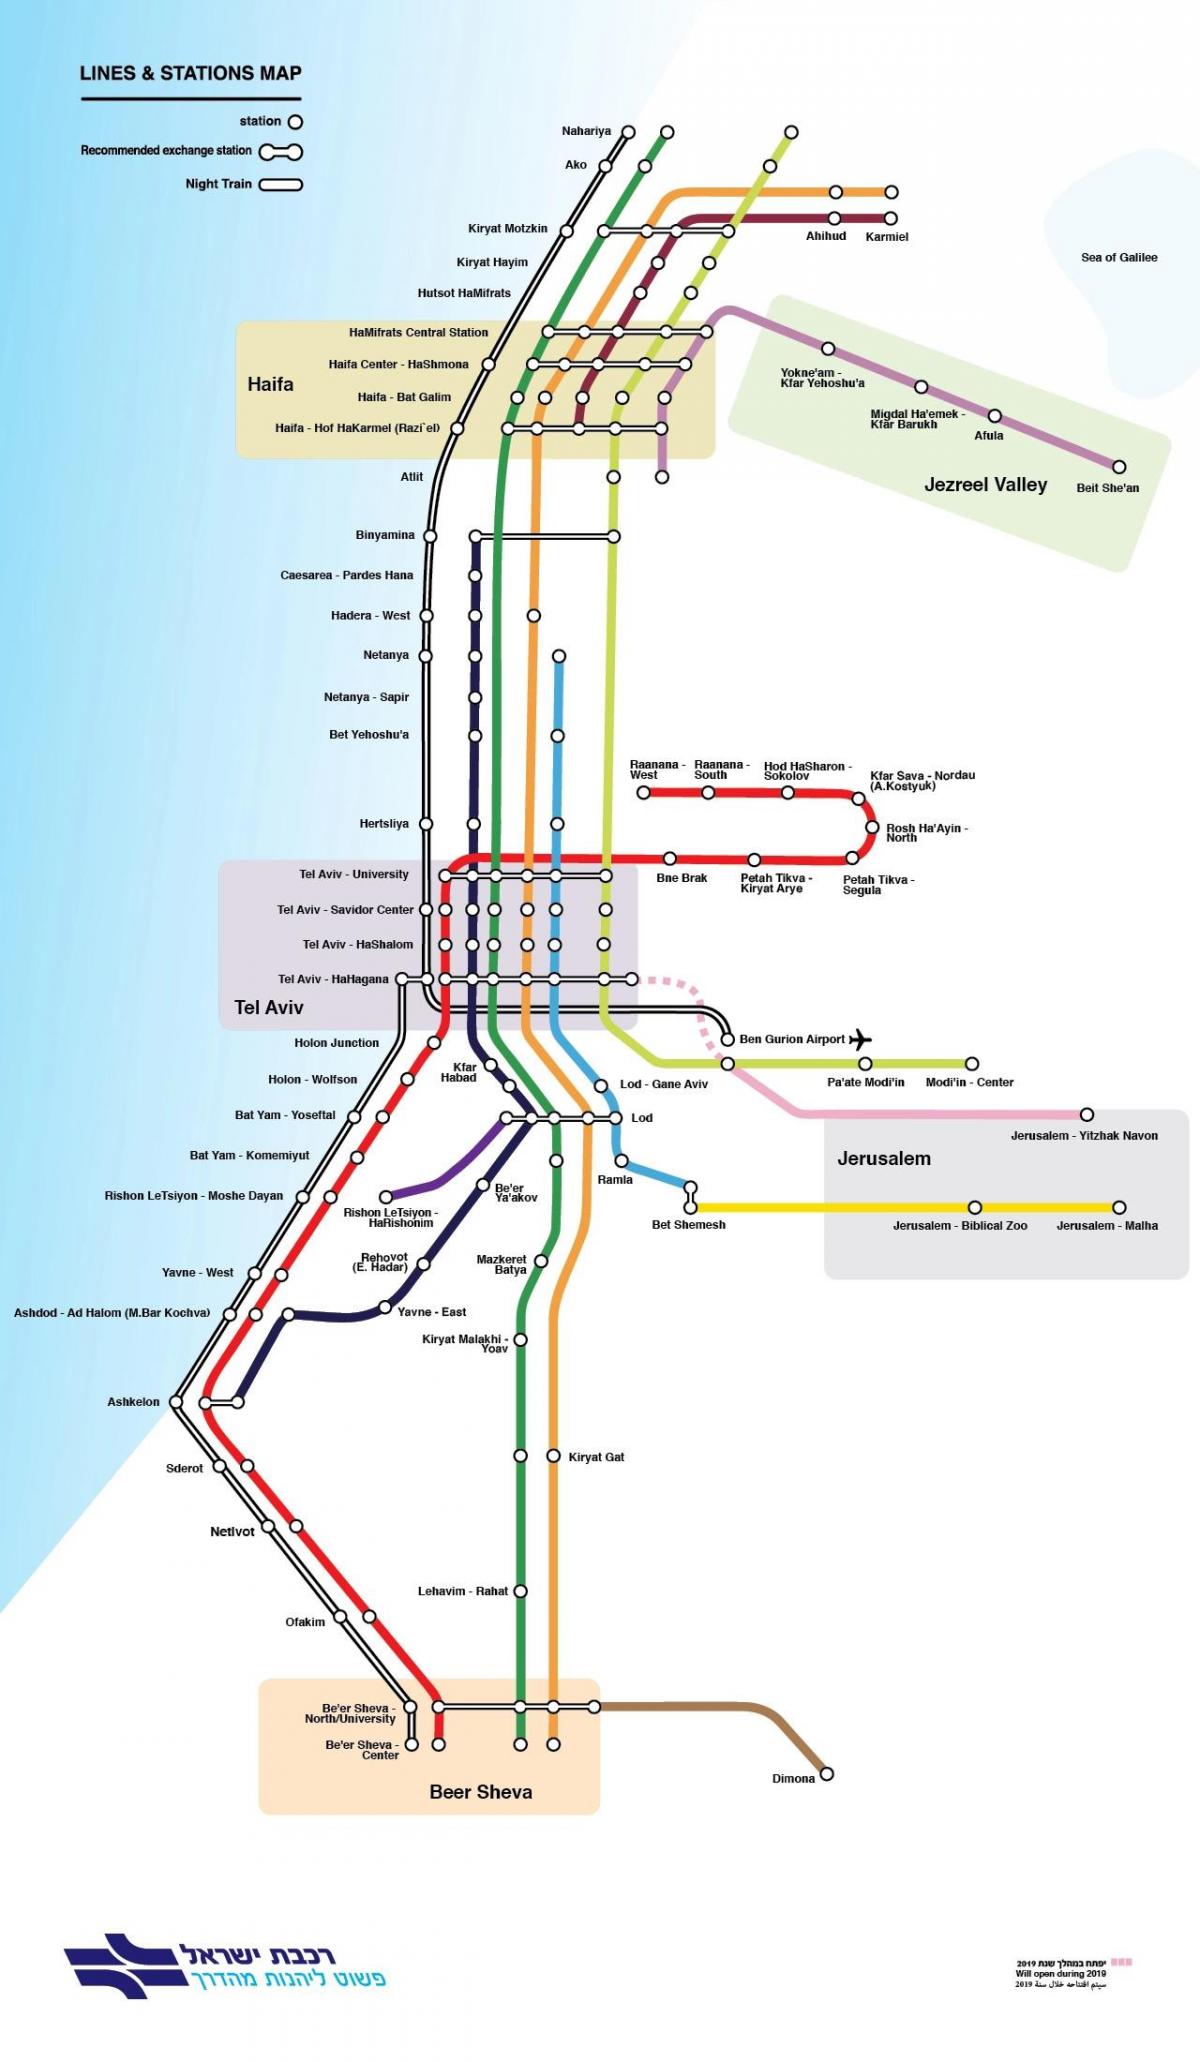 Jerusalem railway stations map